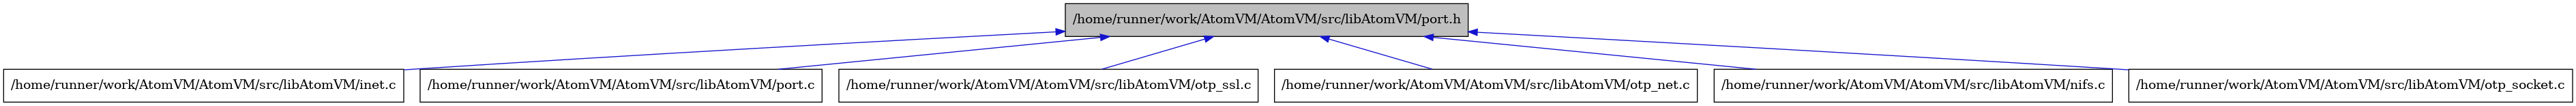 digraph {
    graph [bgcolor="#00000000"]
    node [shape=rectangle style=filled fillcolor="#FFFFFF" font=Helvetica padding=2]
    edge [color="#1414CE"]
    "2" [label="/home/runner/work/AtomVM/AtomVM/src/libAtomVM/inet.c" tooltip="/home/runner/work/AtomVM/AtomVM/src/libAtomVM/inet.c"]
    "7" [label="/home/runner/work/AtomVM/AtomVM/src/libAtomVM/port.c" tooltip="/home/runner/work/AtomVM/AtomVM/src/libAtomVM/port.c"]
    "1" [label="/home/runner/work/AtomVM/AtomVM/src/libAtomVM/port.h" tooltip="/home/runner/work/AtomVM/AtomVM/src/libAtomVM/port.h" fillcolor="#BFBFBF"]
    "6" [label="/home/runner/work/AtomVM/AtomVM/src/libAtomVM/otp_ssl.c" tooltip="/home/runner/work/AtomVM/AtomVM/src/libAtomVM/otp_ssl.c"]
    "4" [label="/home/runner/work/AtomVM/AtomVM/src/libAtomVM/otp_net.c" tooltip="/home/runner/work/AtomVM/AtomVM/src/libAtomVM/otp_net.c"]
    "3" [label="/home/runner/work/AtomVM/AtomVM/src/libAtomVM/nifs.c" tooltip="/home/runner/work/AtomVM/AtomVM/src/libAtomVM/nifs.c"]
    "5" [label="/home/runner/work/AtomVM/AtomVM/src/libAtomVM/otp_socket.c" tooltip="/home/runner/work/AtomVM/AtomVM/src/libAtomVM/otp_socket.c"]
    "1" -> "2" [dir=back tooltip="include"]
    "1" -> "3" [dir=back tooltip="include"]
    "1" -> "4" [dir=back tooltip="include"]
    "1" -> "5" [dir=back tooltip="include"]
    "1" -> "6" [dir=back tooltip="include"]
    "1" -> "7" [dir=back tooltip="include"]
}